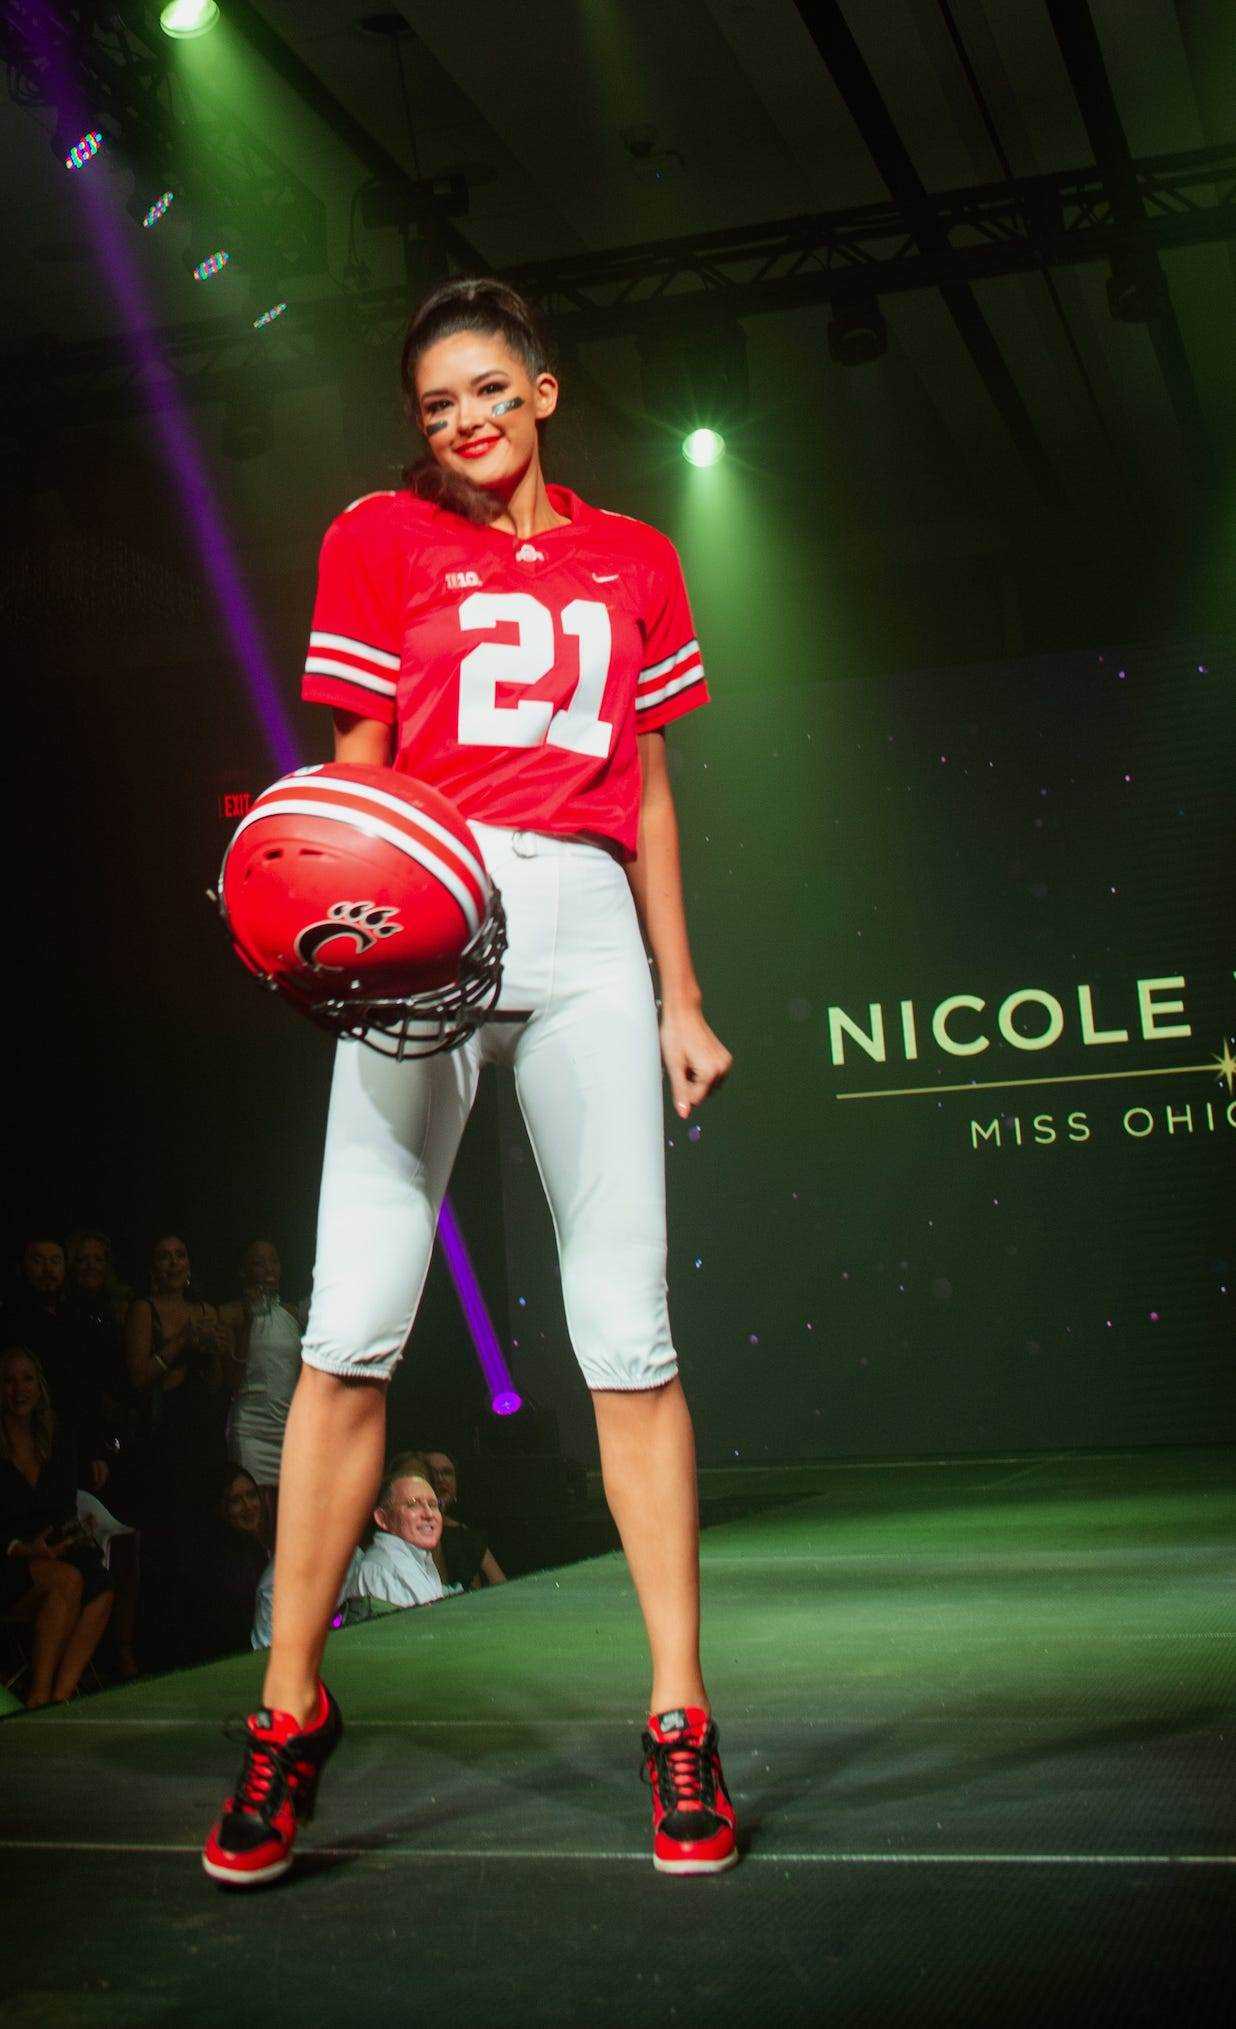 Miss Ohio Nicole Wess